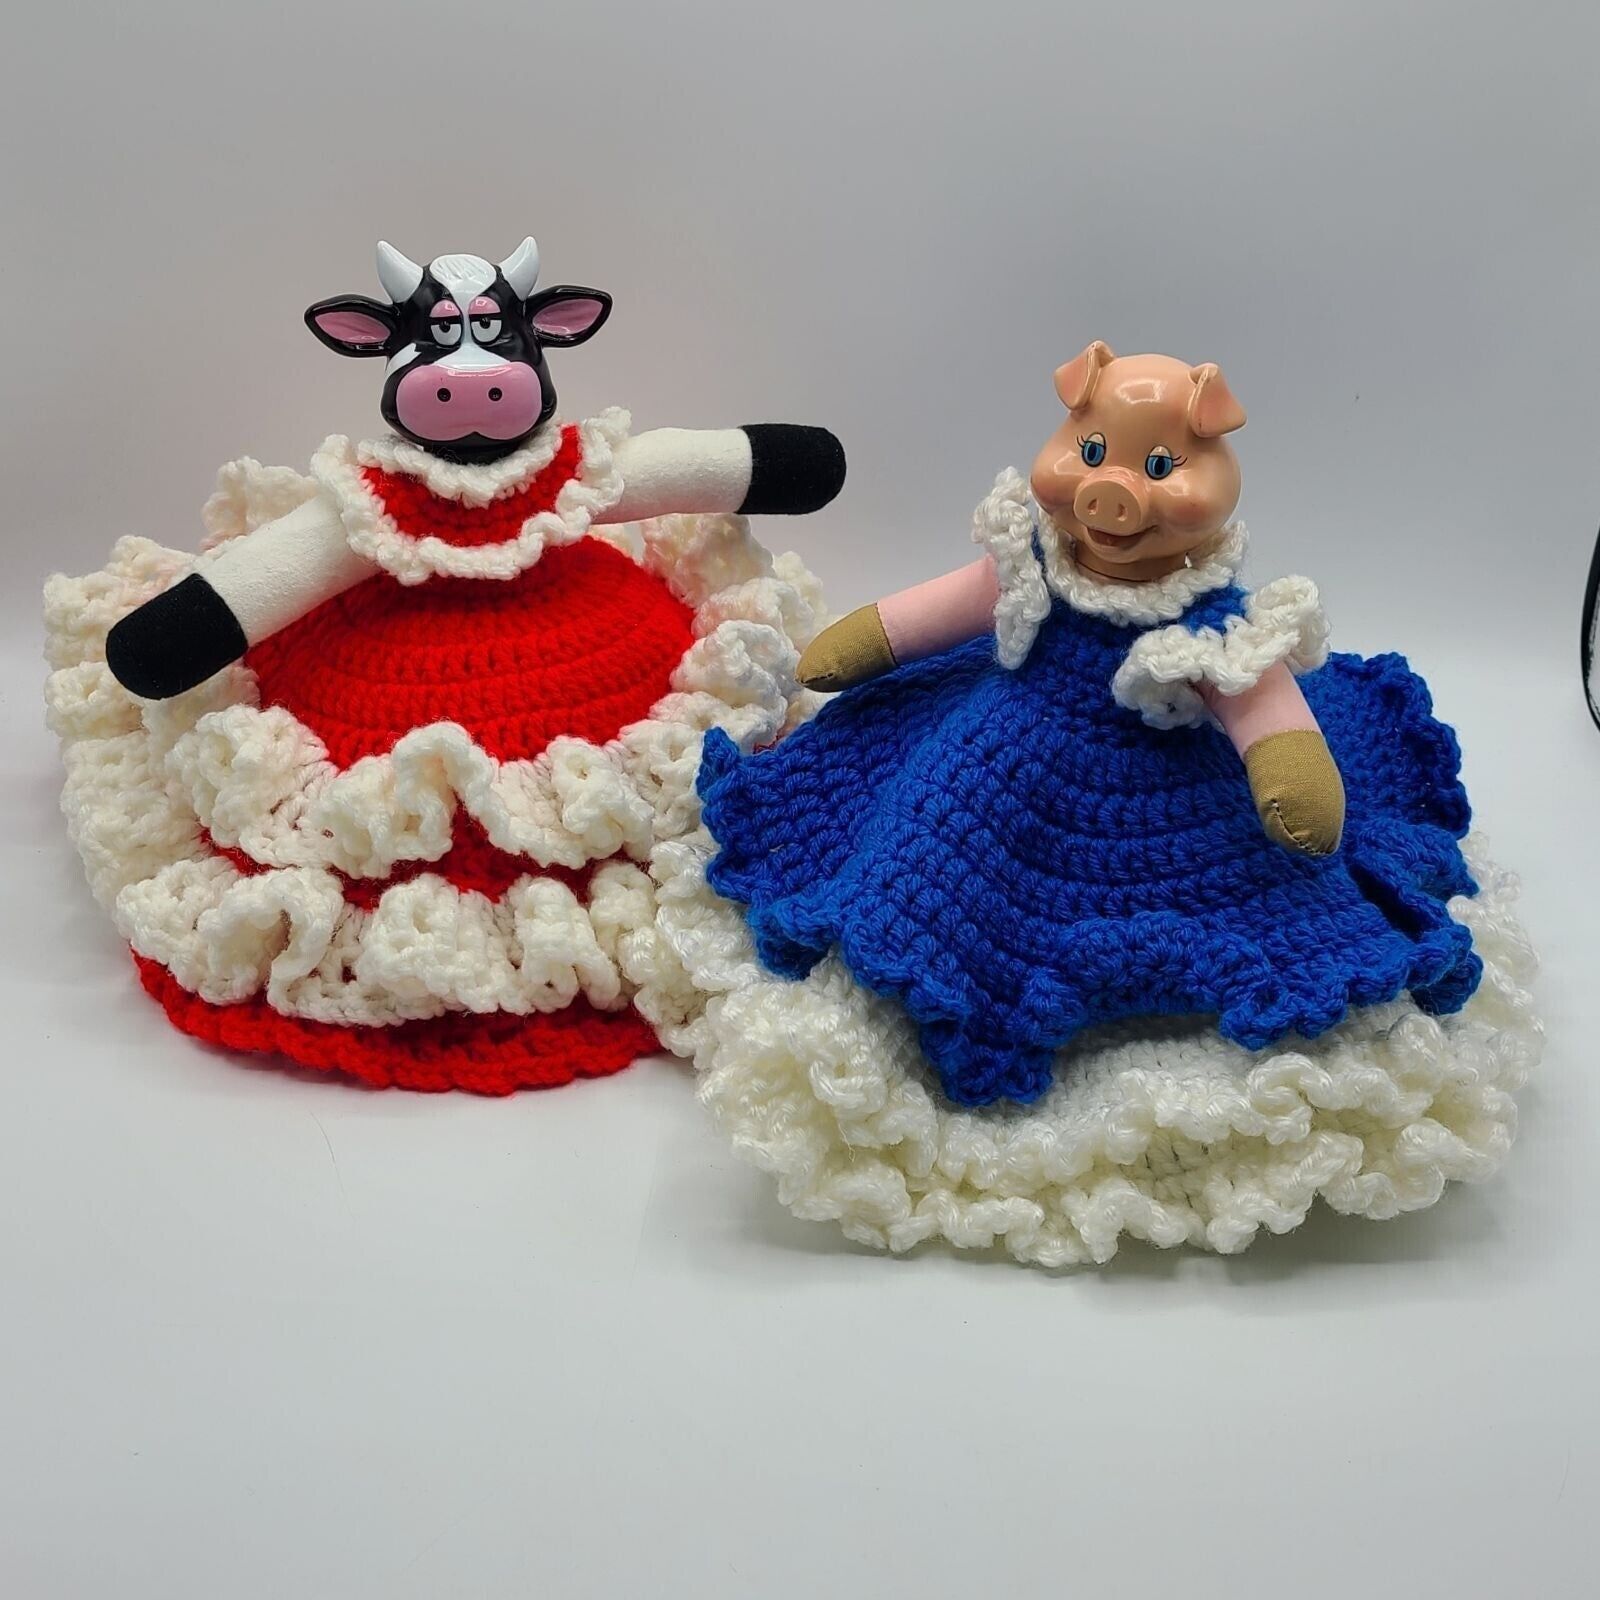 Vintage Kitschy Crochet Barnyard Cow Pig Covers Handmade